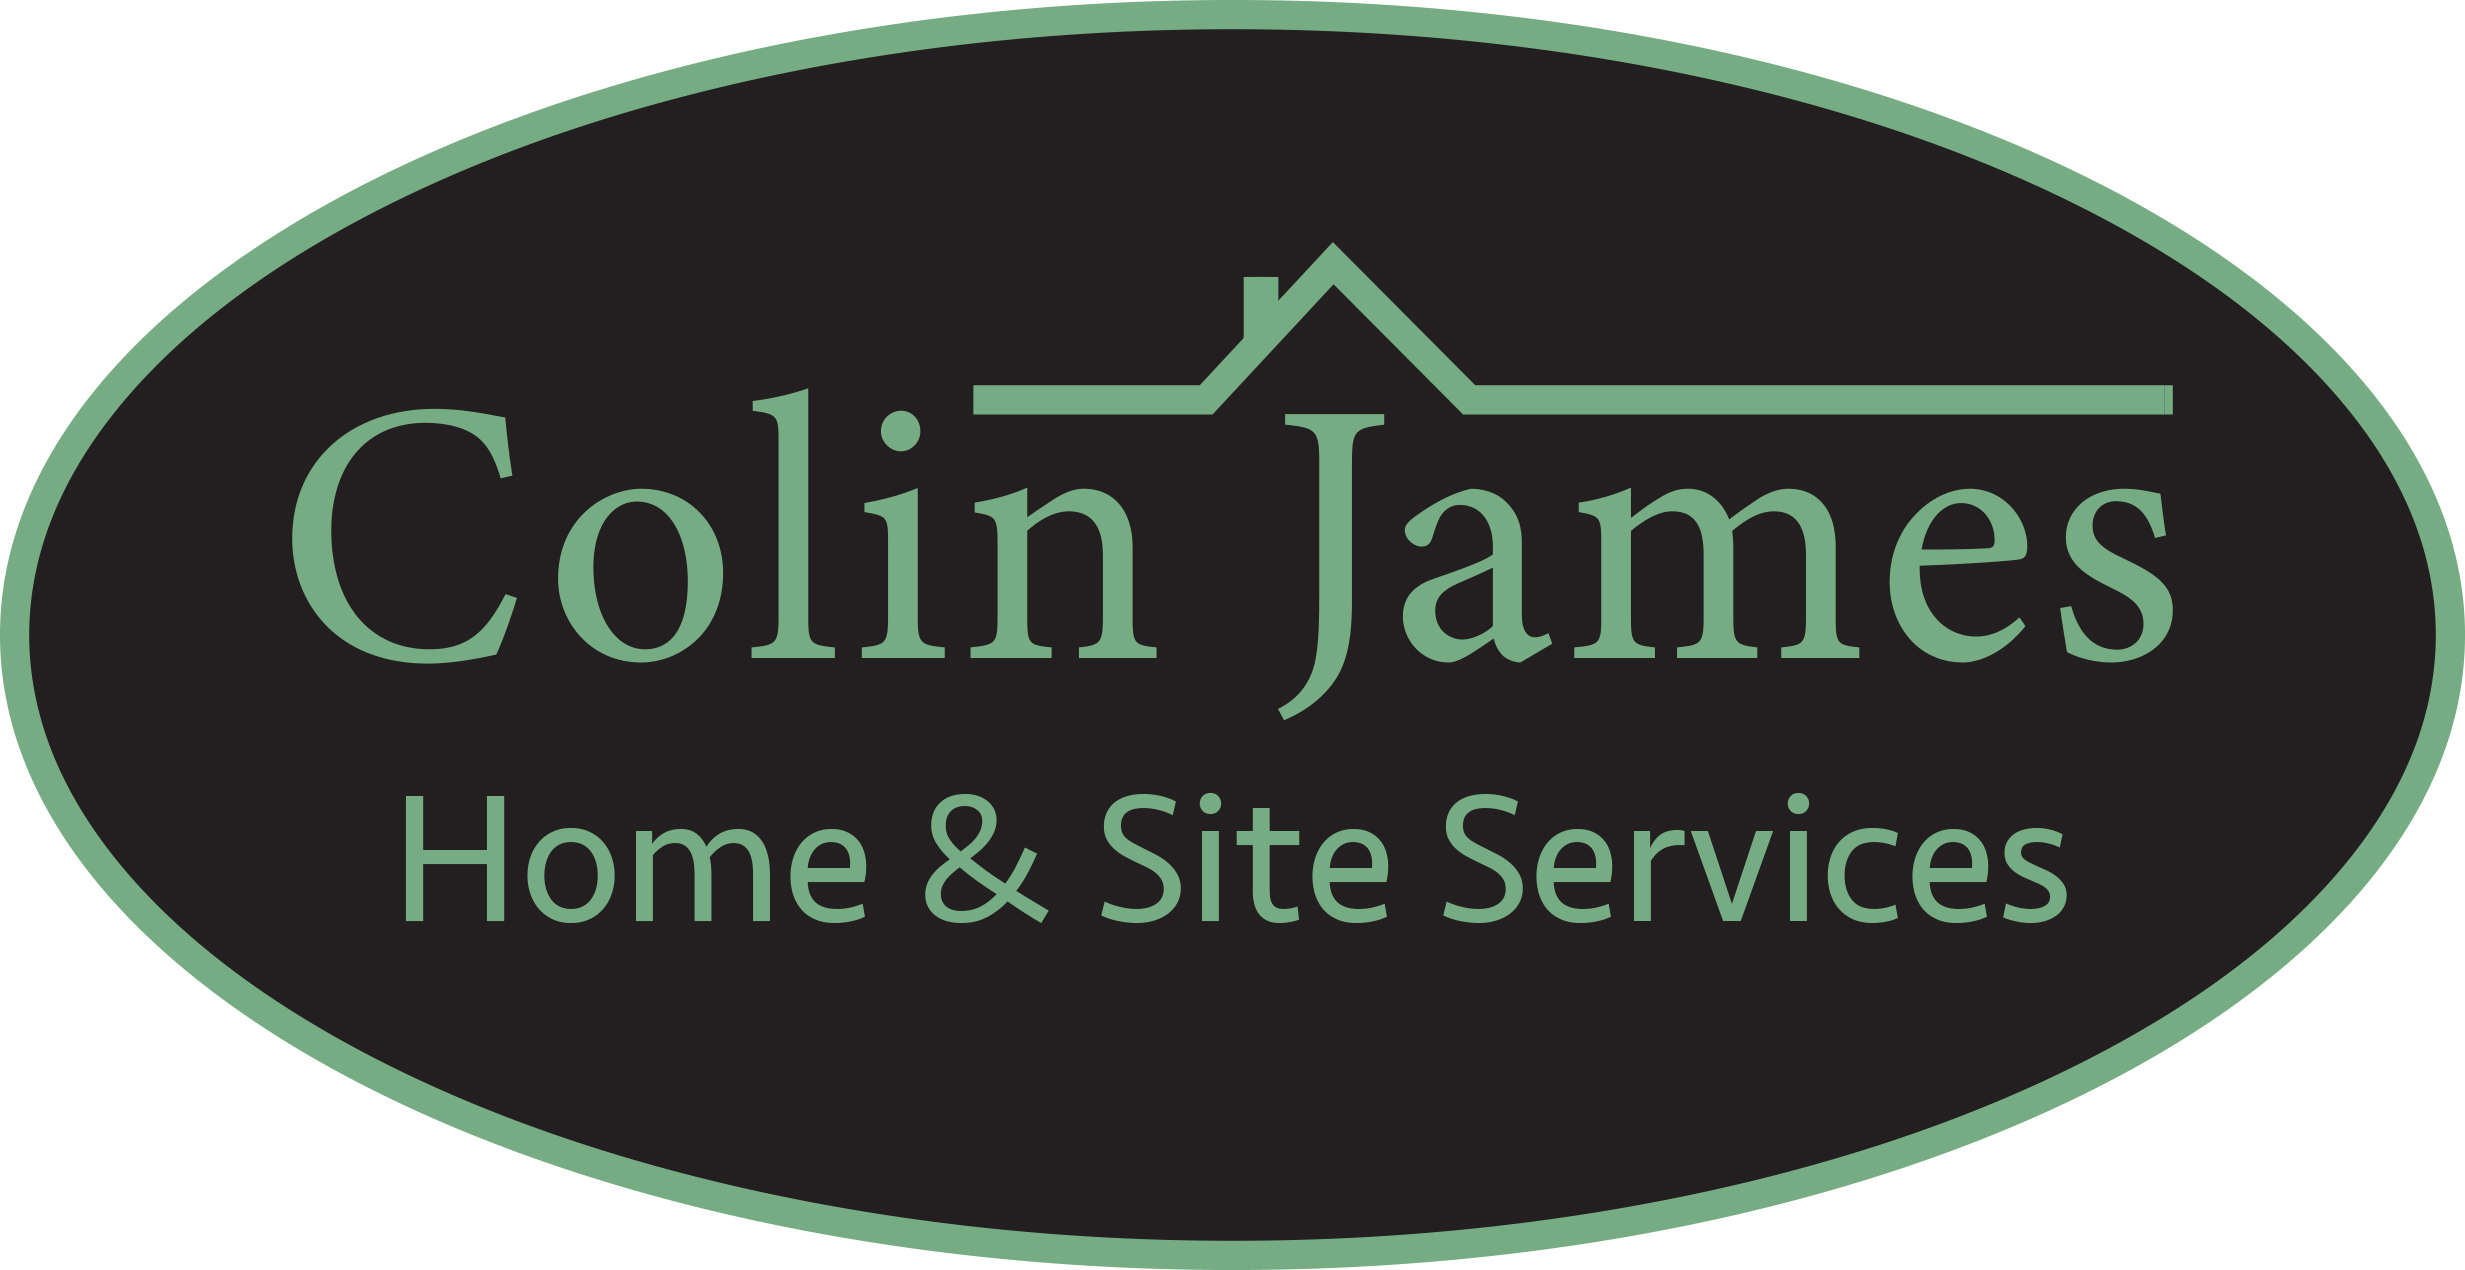 Colin James Home & Site Services